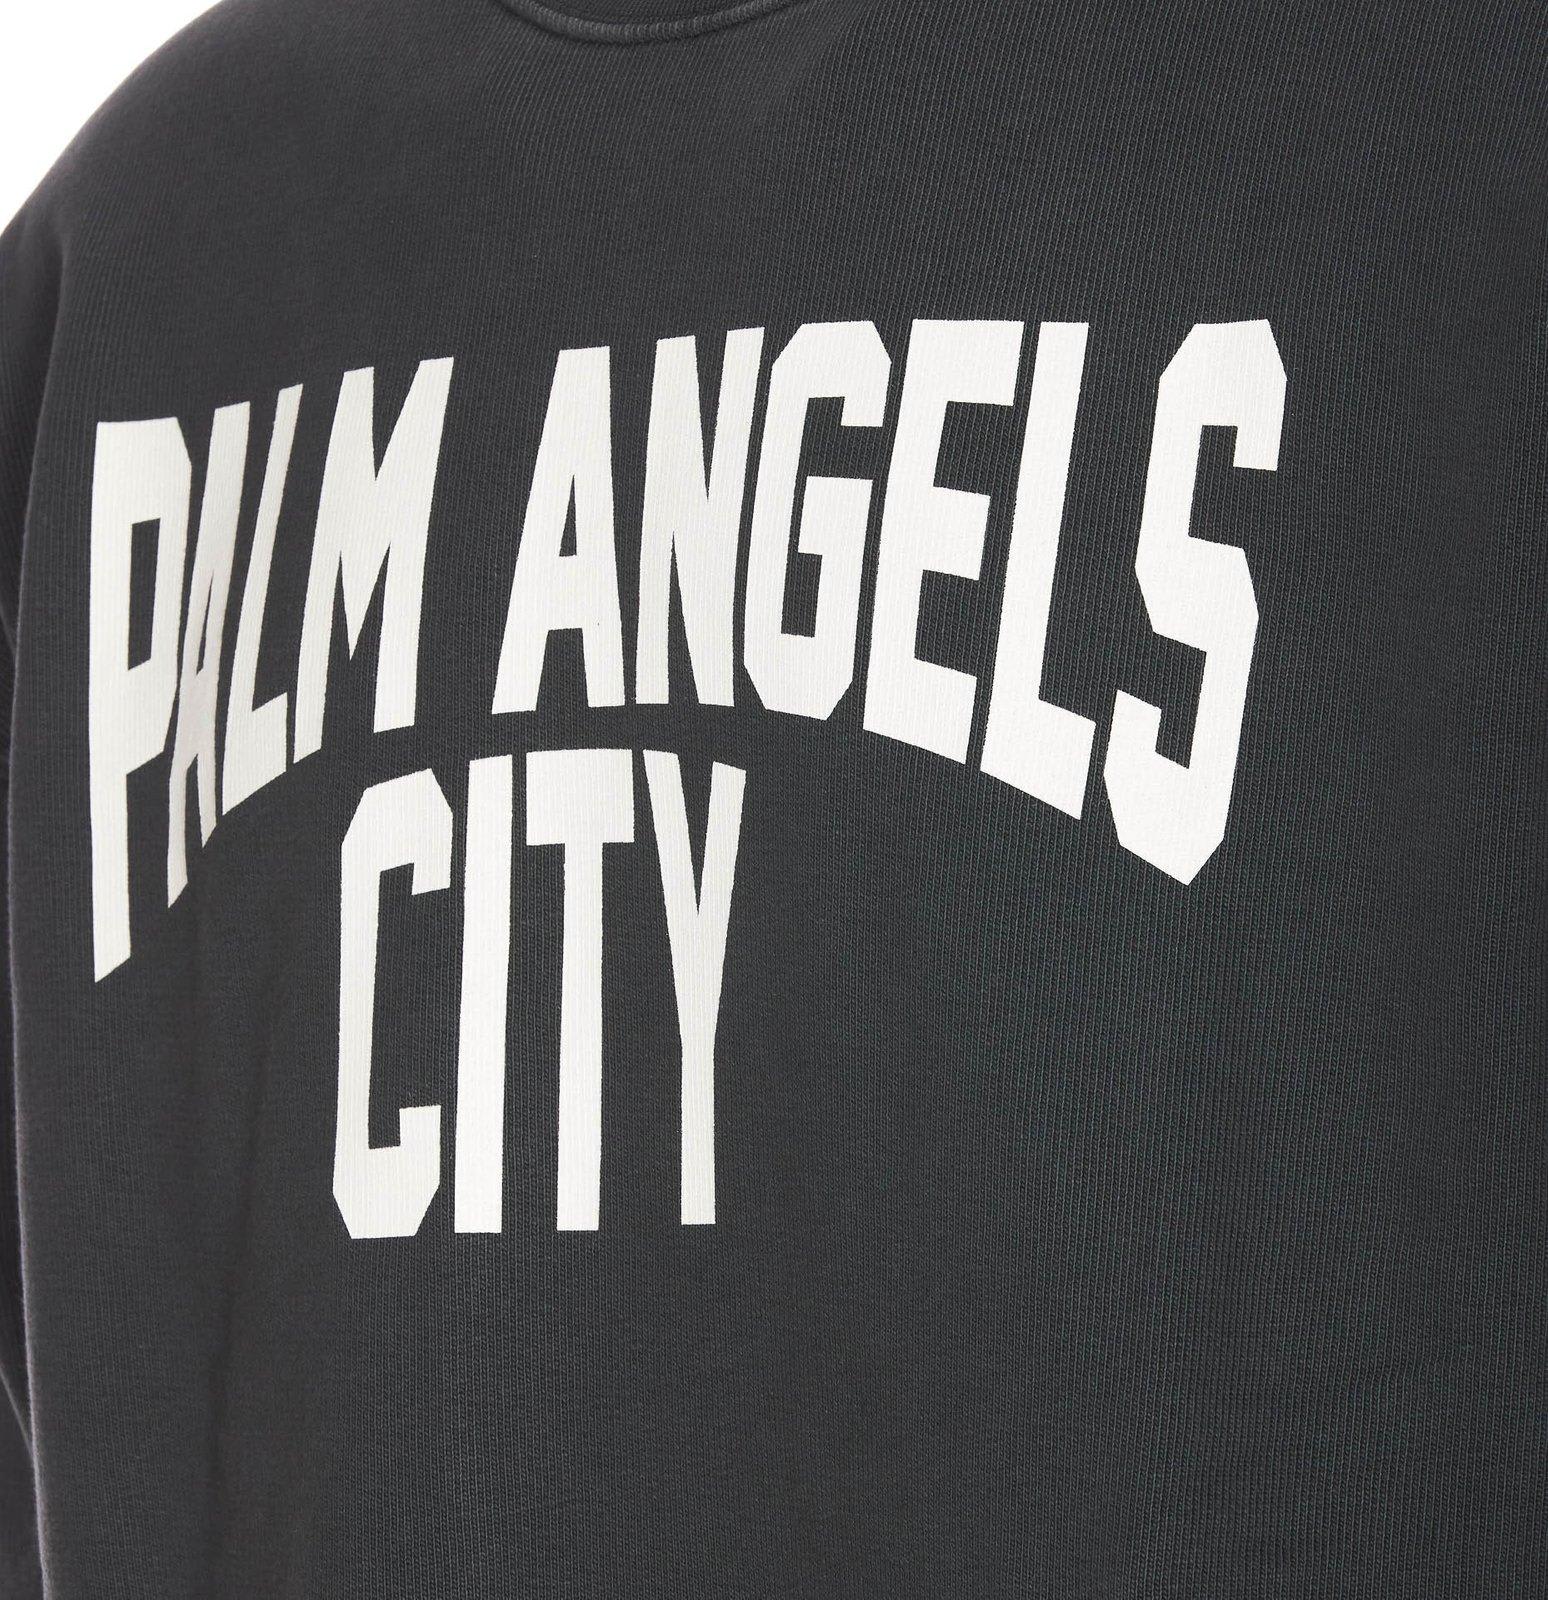 Shop Palm Angels Pa City Printed Crewneck Sweatshirt In Grey